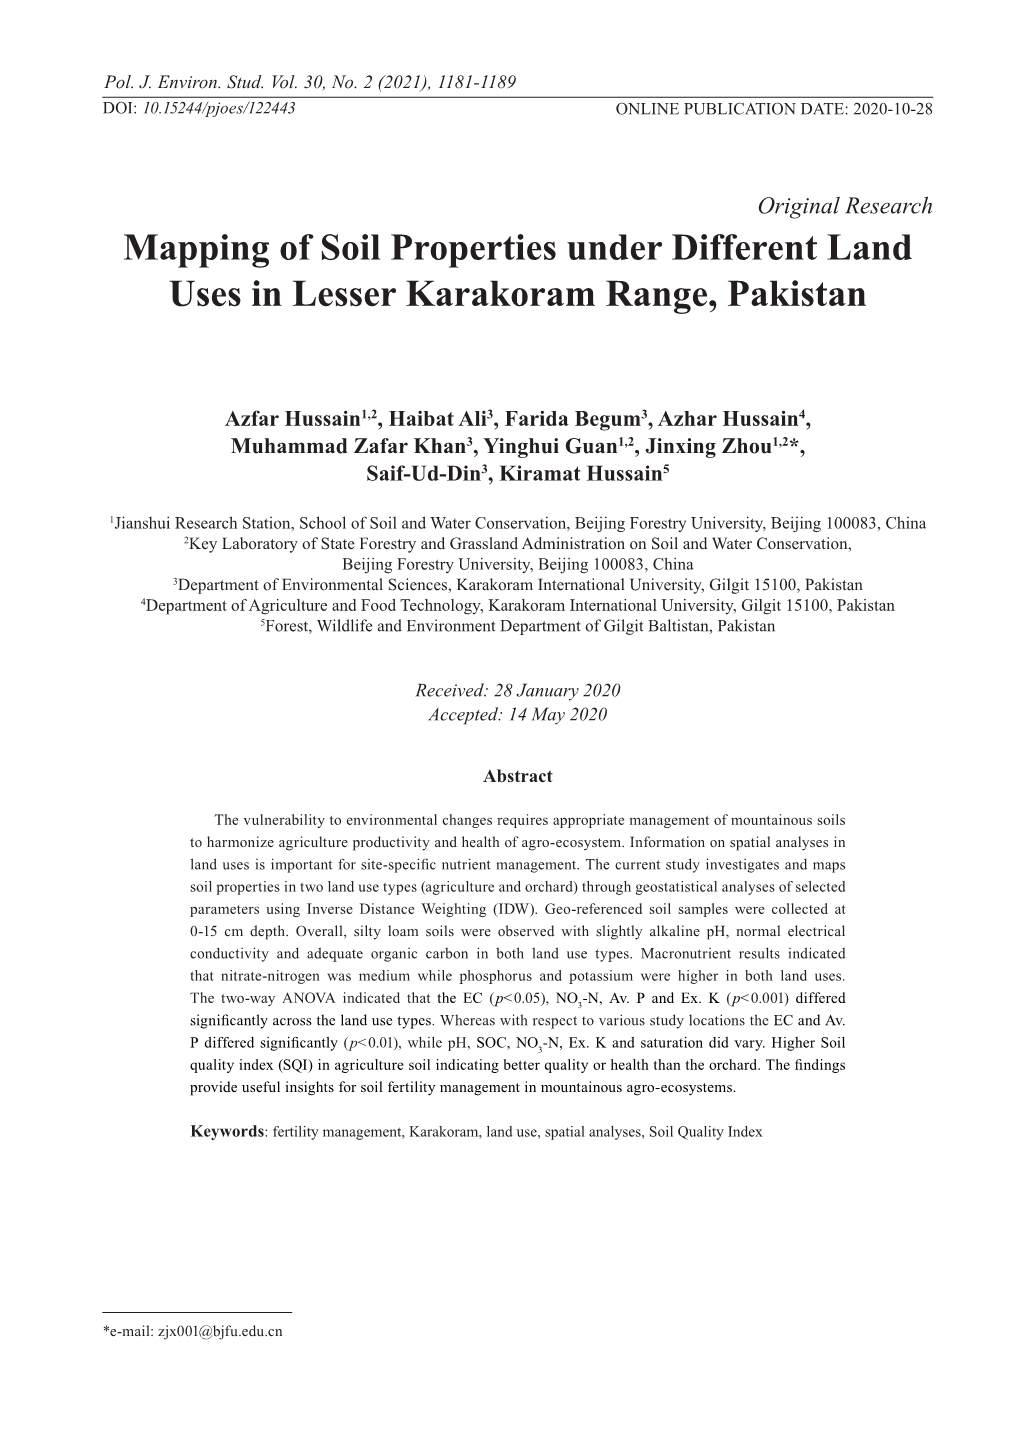 Mapping of Soil Properties Under Different Land Uses in Lesser Karakoram Range, Pakistan